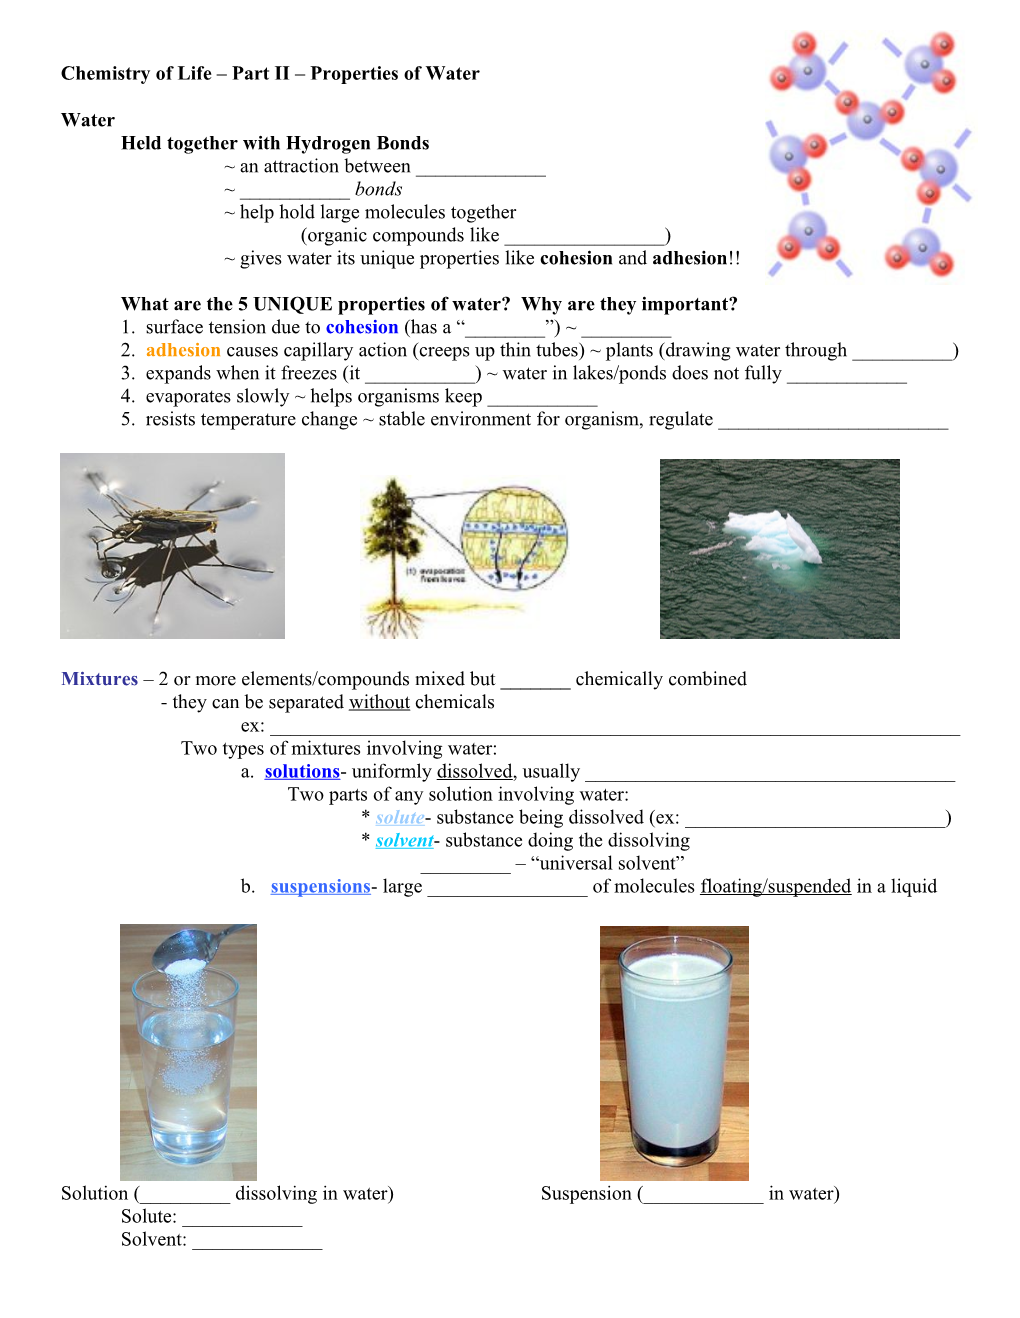 Chemistry of Life Part II Properties of Water